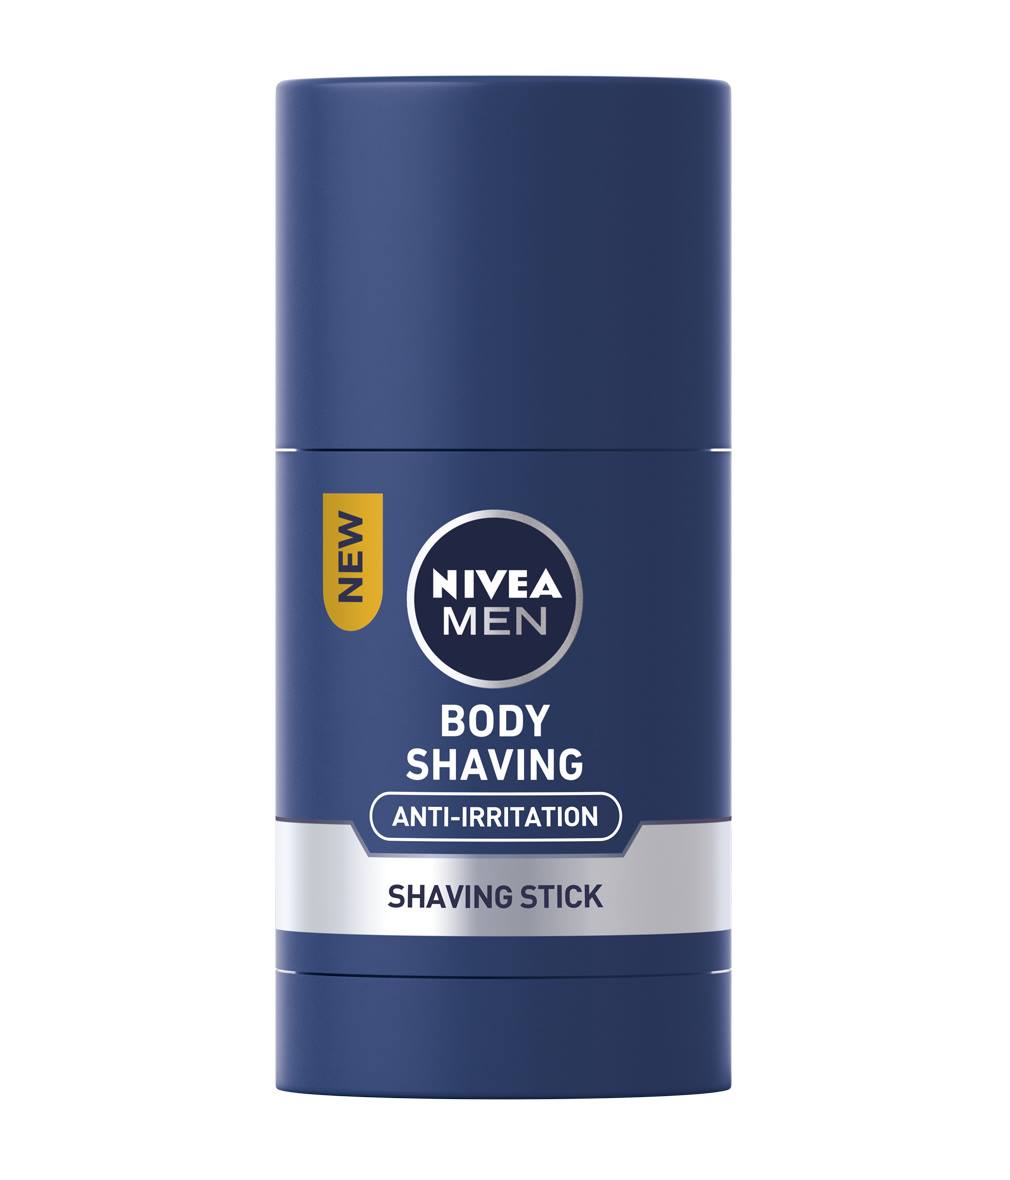 Shaving and Personal Care Products Logo - NIVEA MEN ANTI IRRITATION